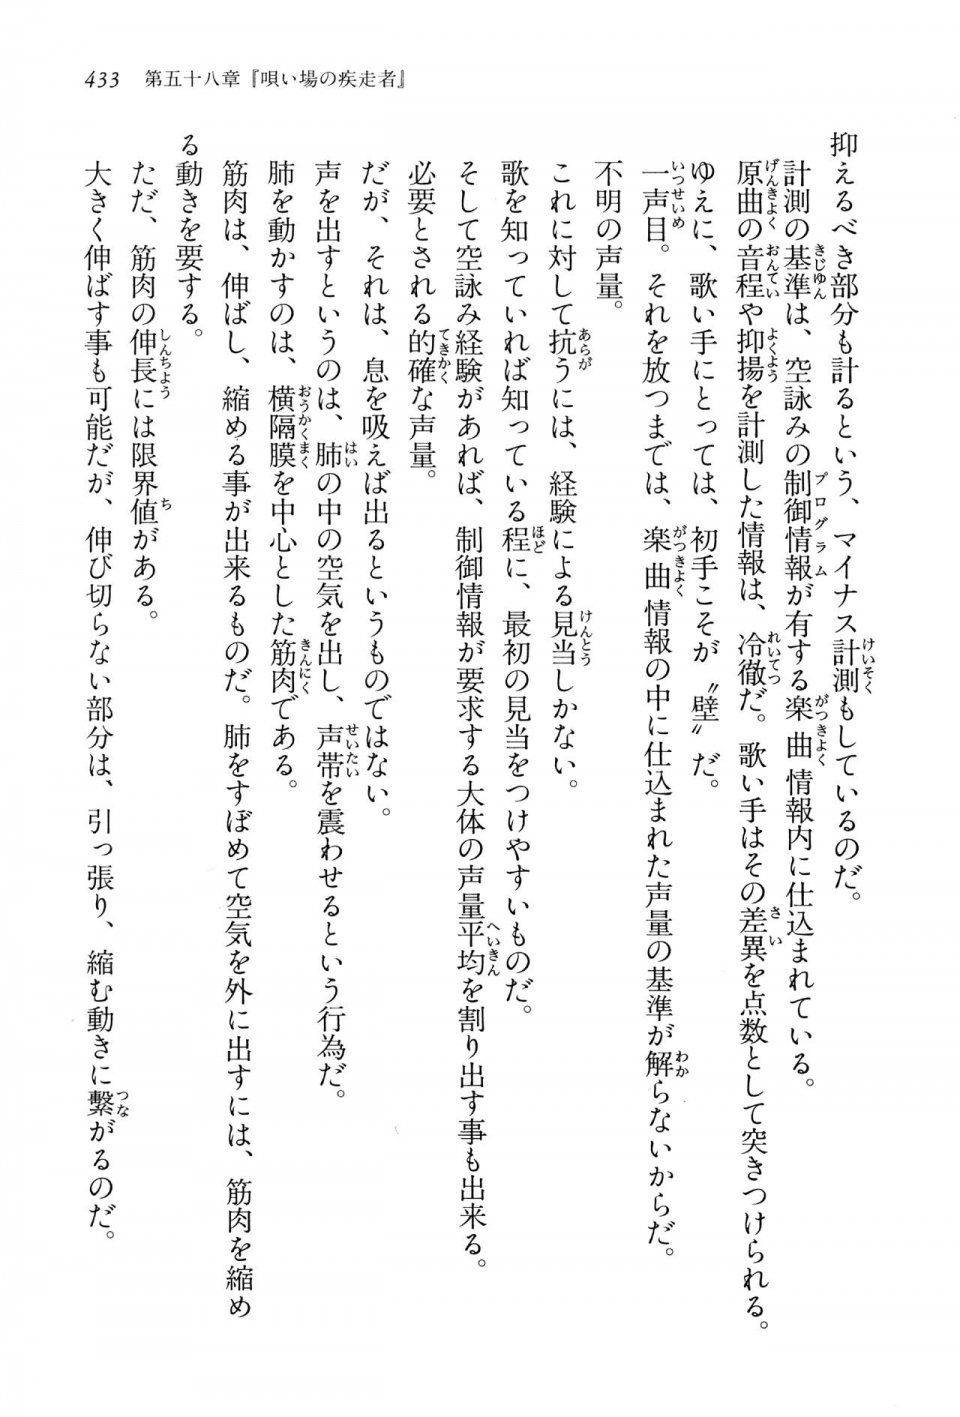 Kyoukai Senjou no Horizon LN Vol 15(6C) Part 1 - Photo #433